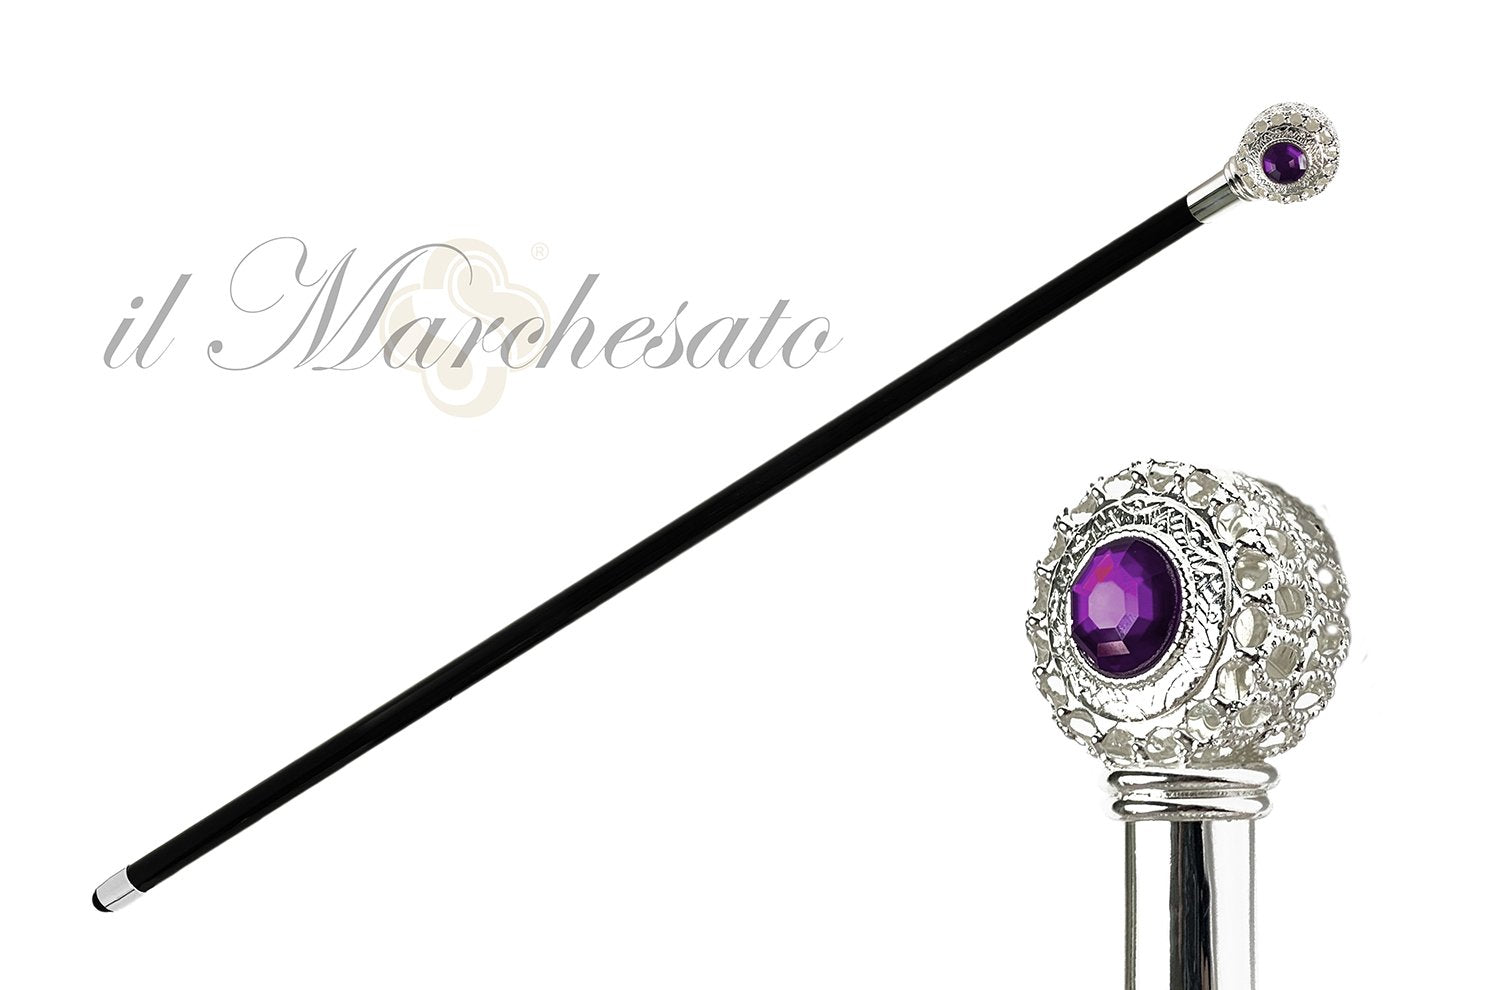 Stunning Swarovski Crystal Rhinestone Walking Stick – ilMarchesato